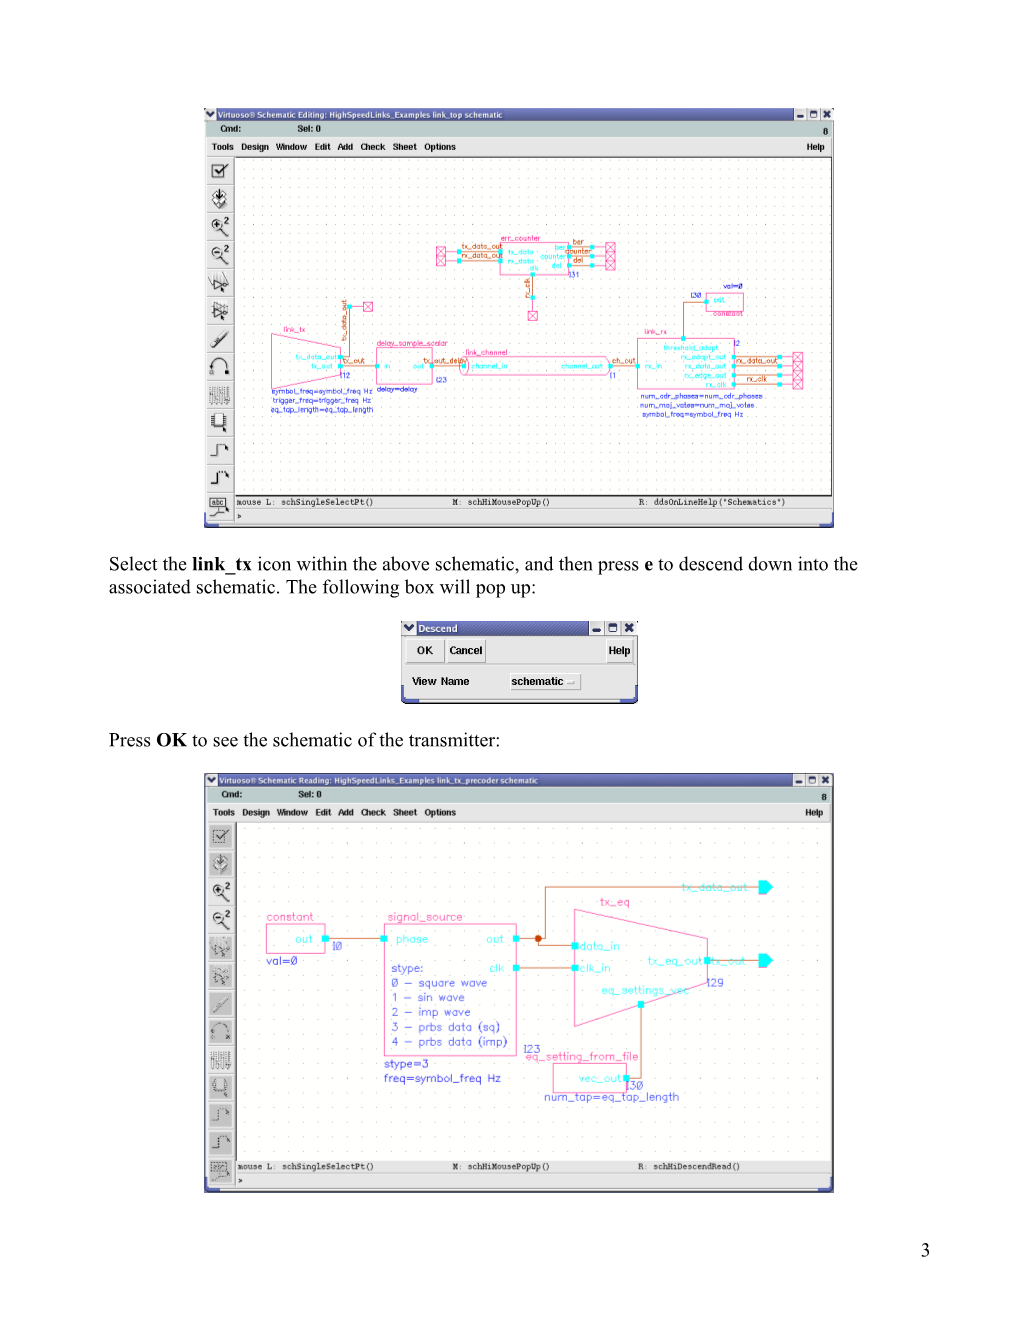 Behavioral Simulation of a High-Speed Link Transceiver Using Vppsim